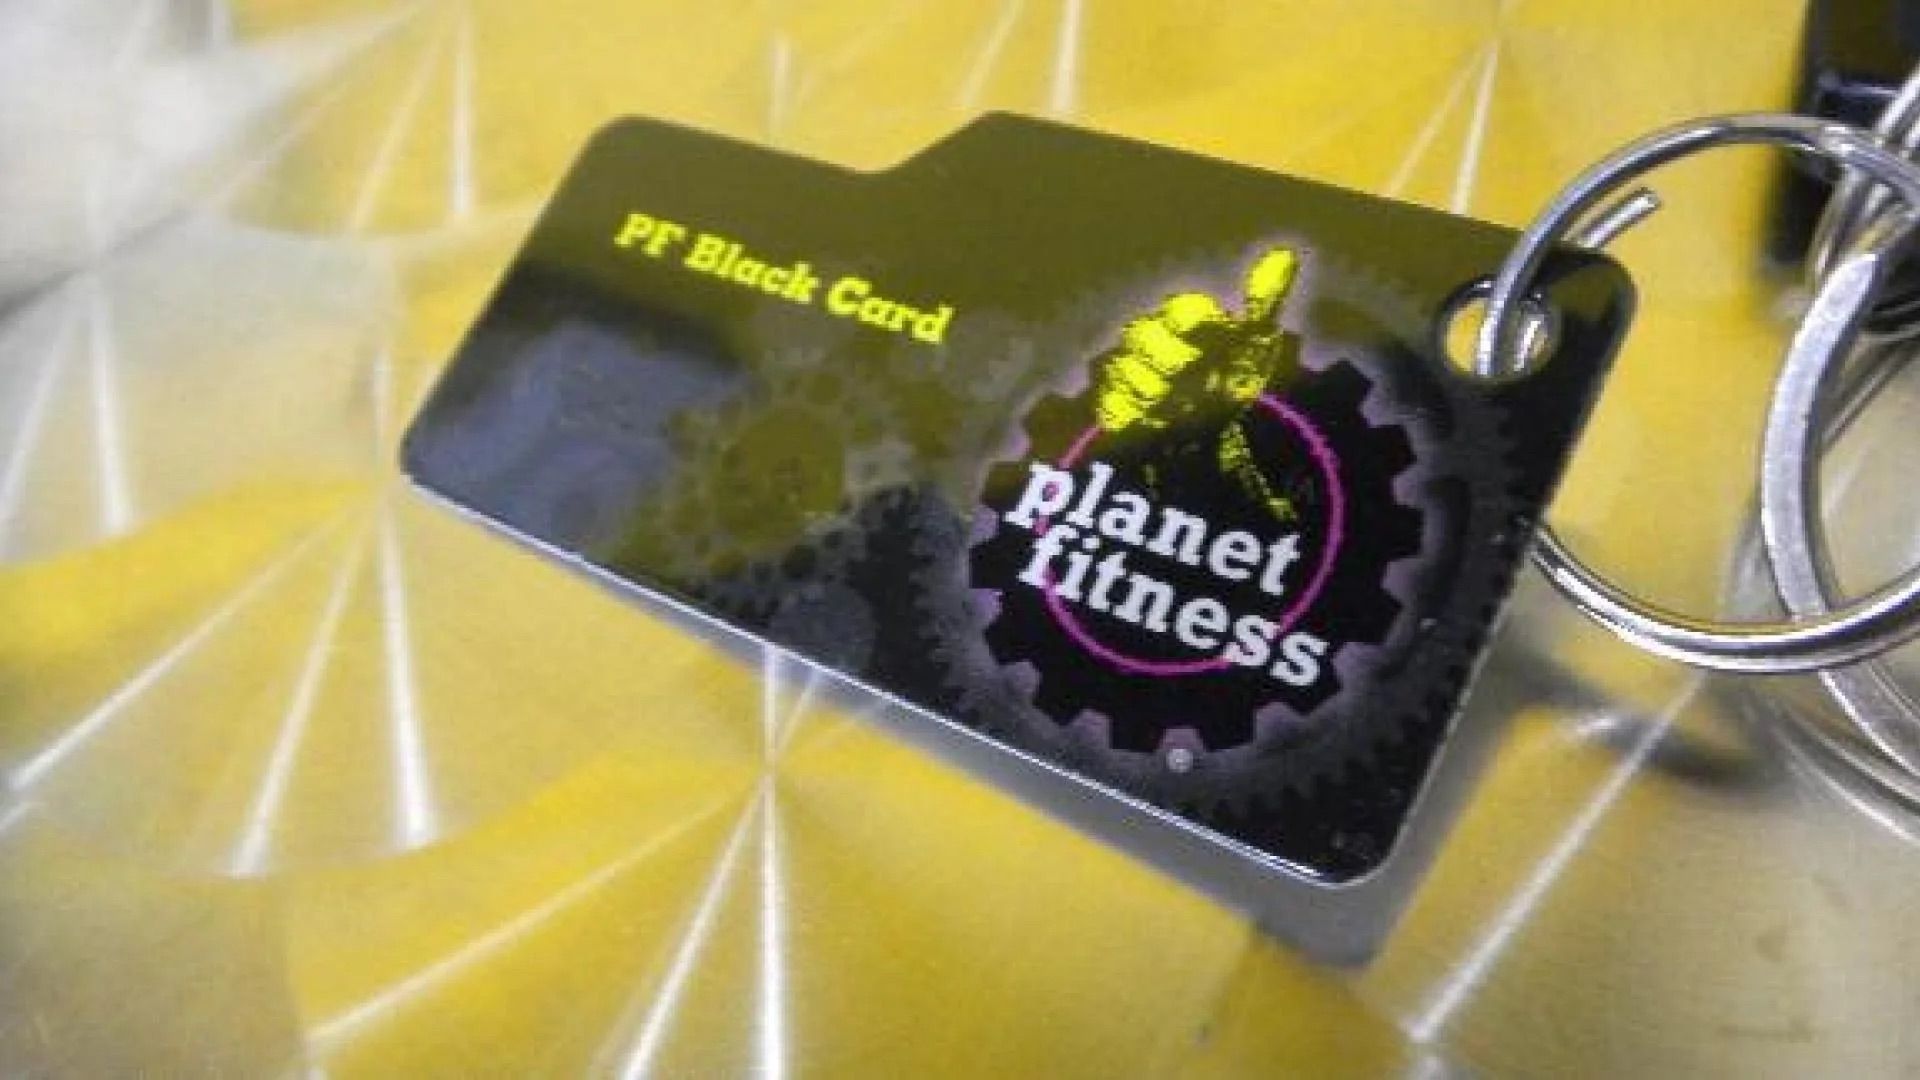 Planet-Fitness-Black-Card-Membership